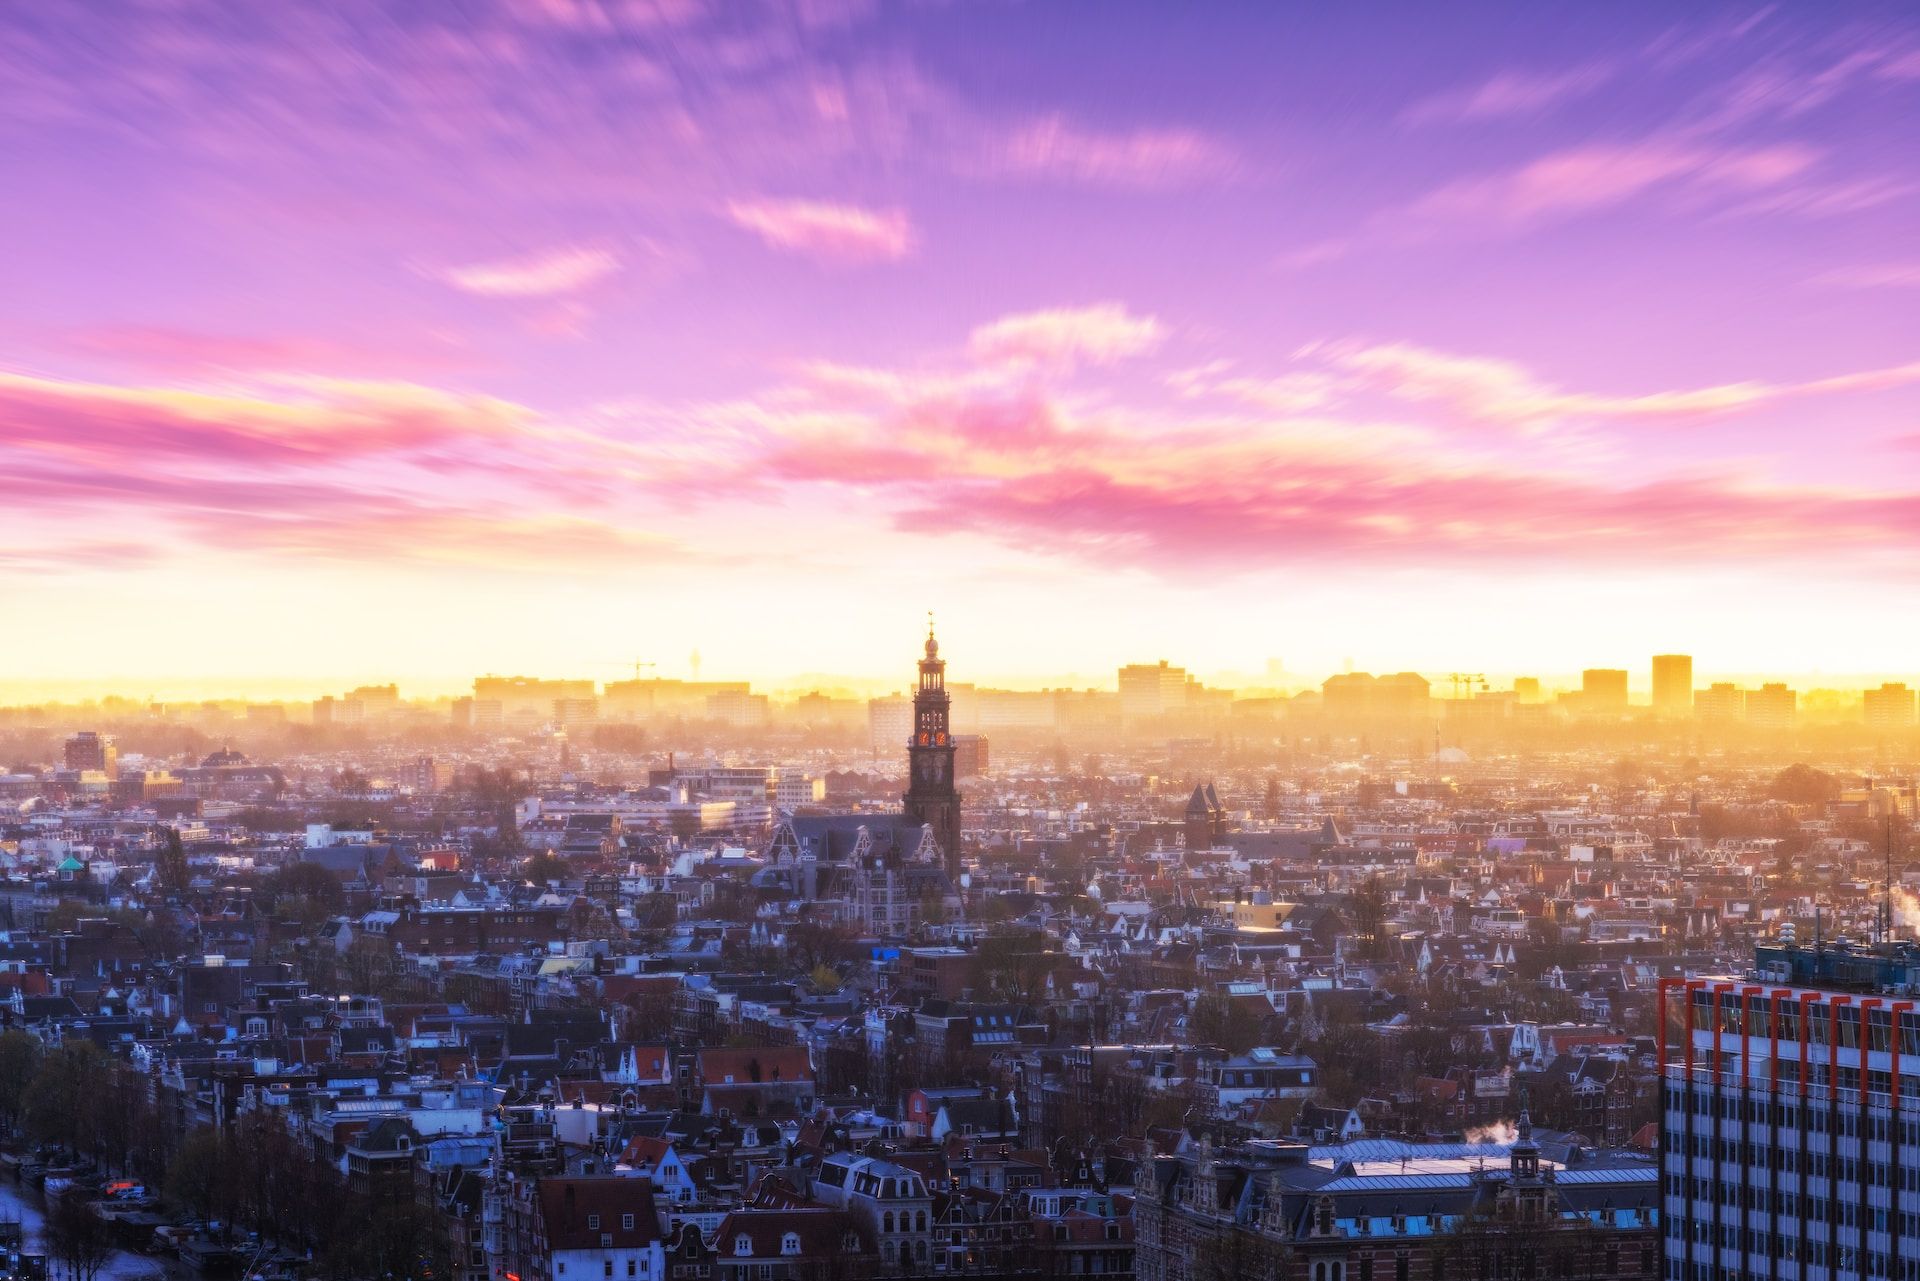 The skyline of Amsterdam